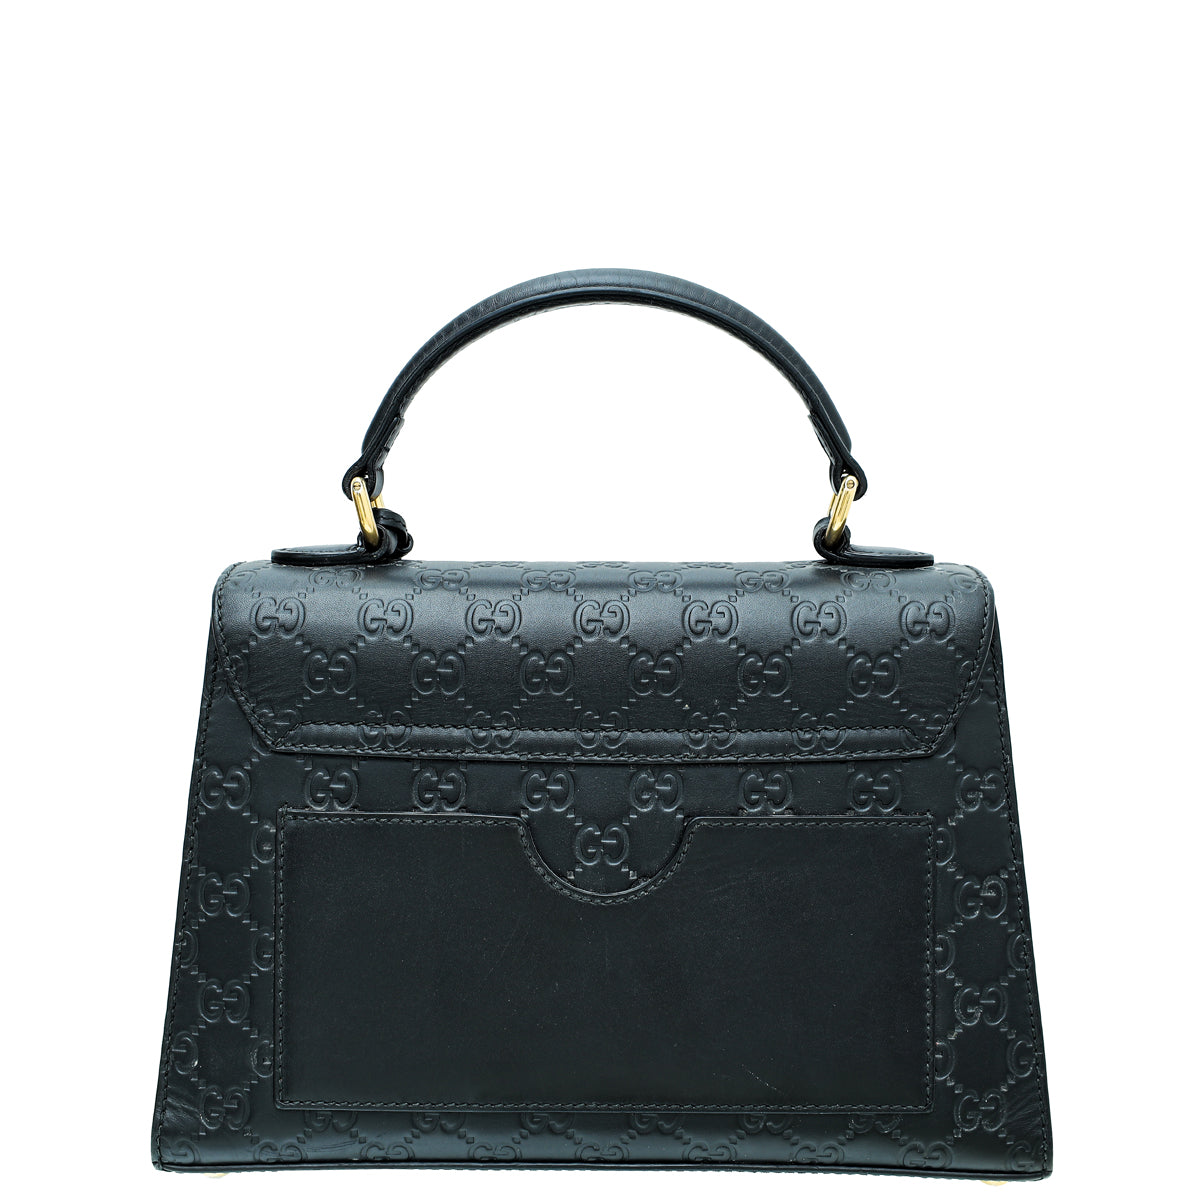 Gucci Black Guccissima Padlock Top Handle Small Bag